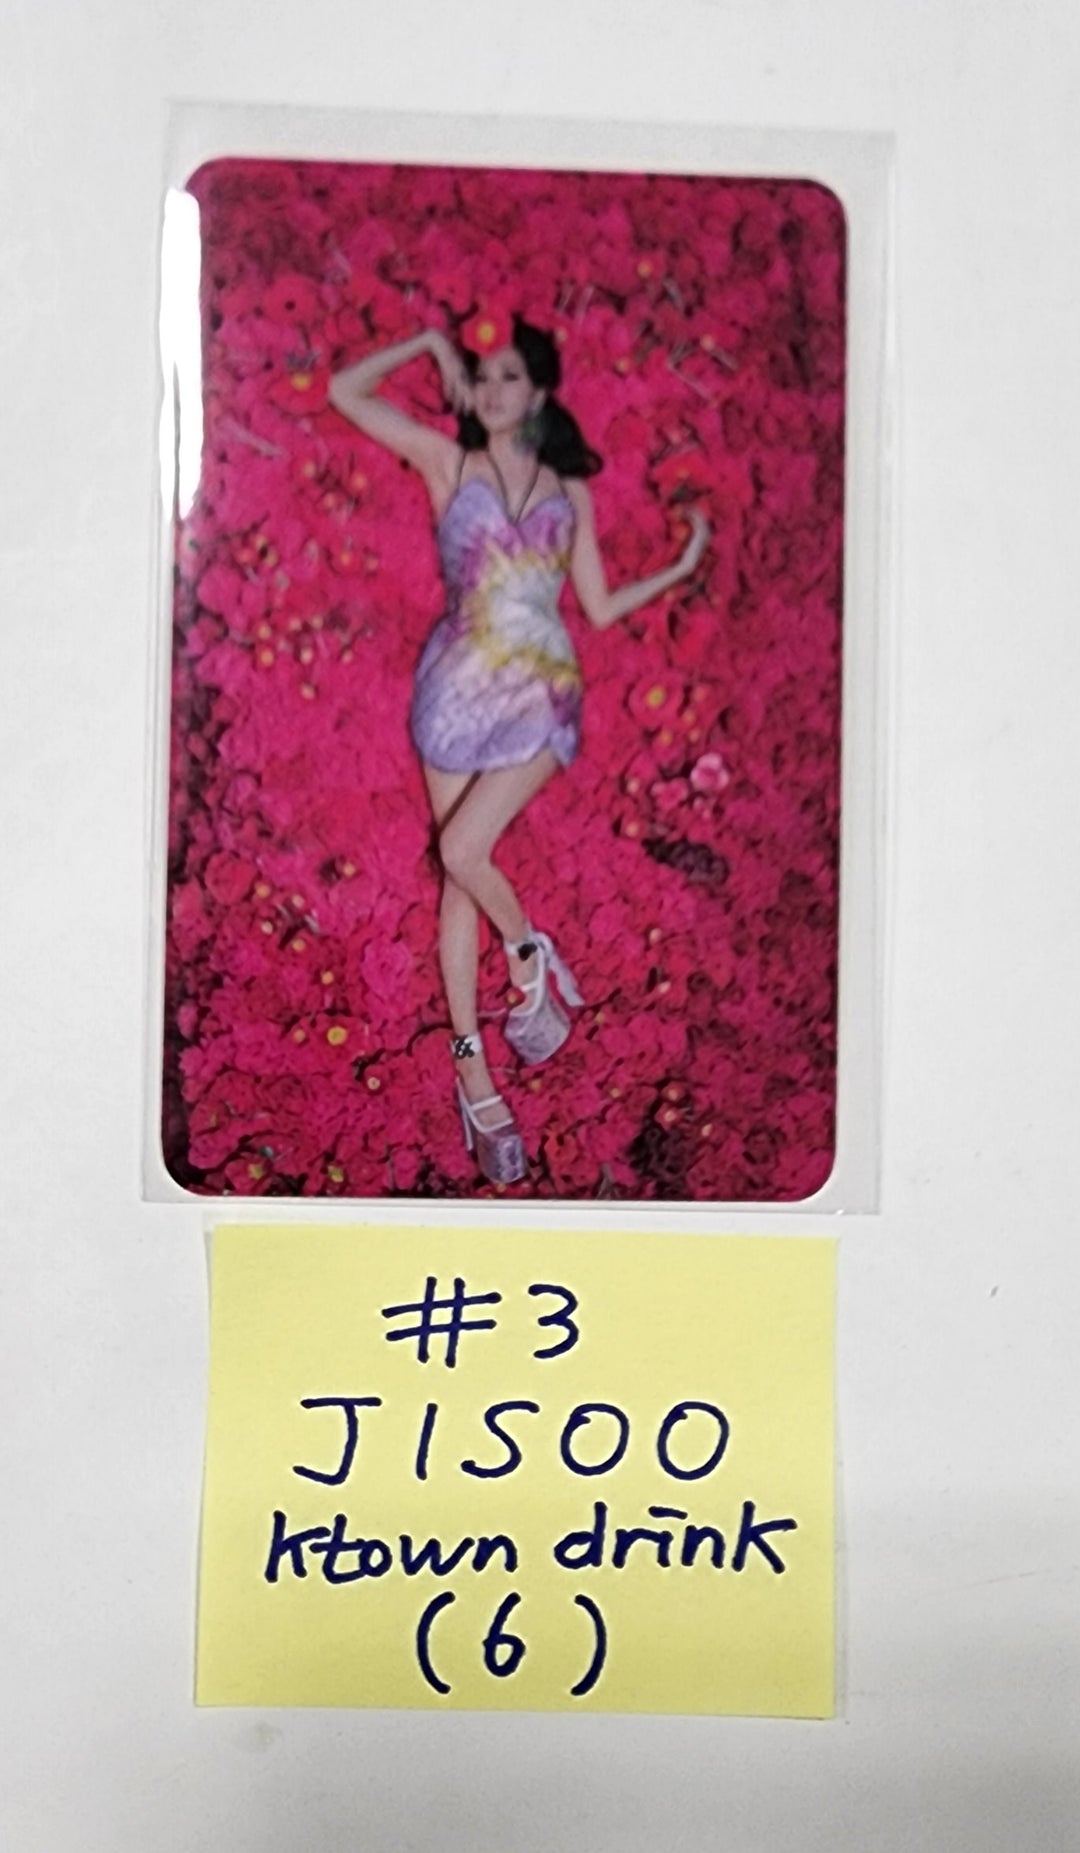 JISOO (Of Black Pink) "ME" 1st Single Album - Ktown4U ドリンクイベントフォトカード [INSA,COEX]